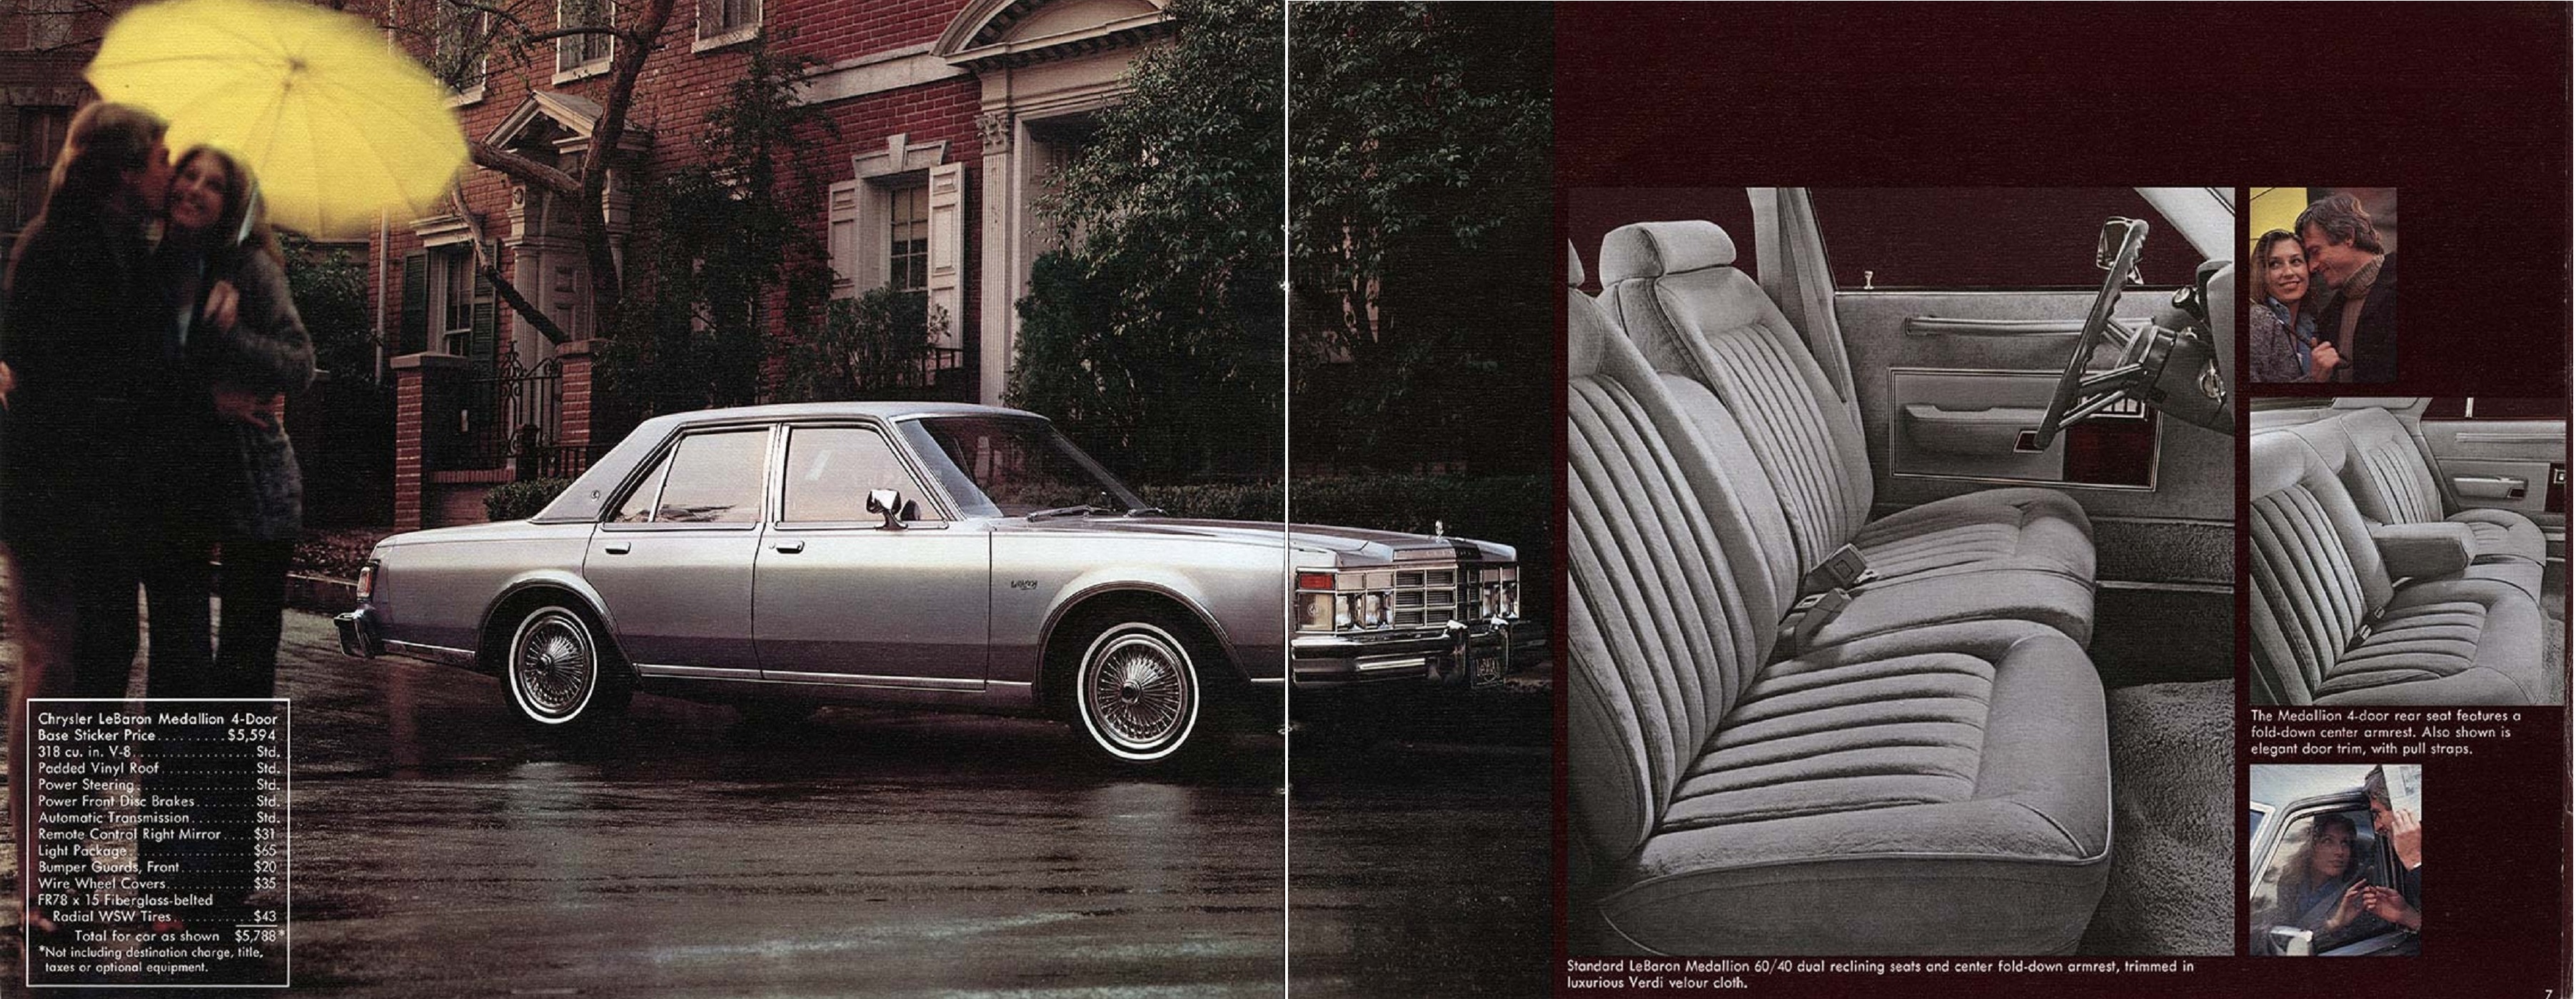 1977 Chrysler LeBaron Brochure 06-07